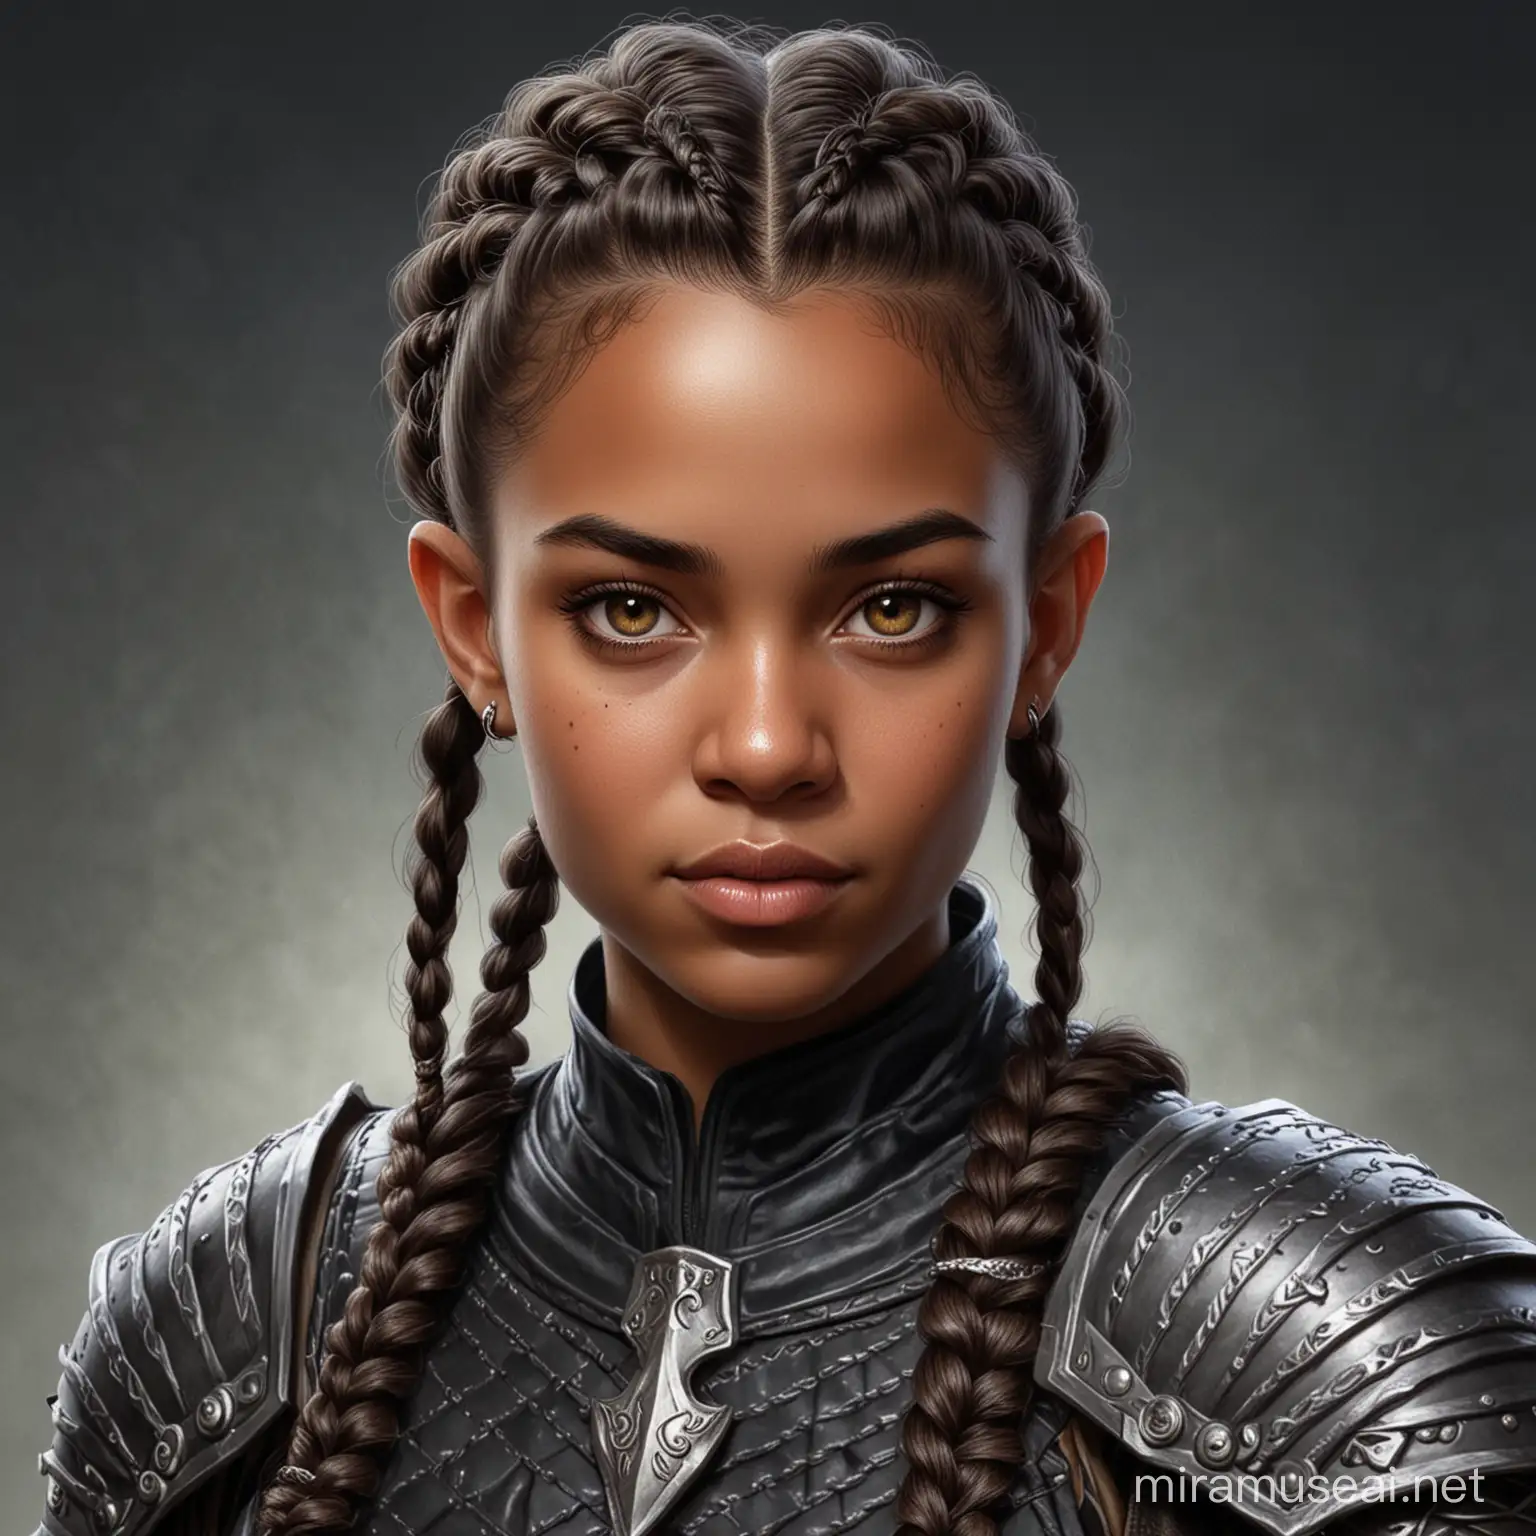 black halfling girl, cornrow hair, armor, dungeons and dragons, hyperrealistic, portrait